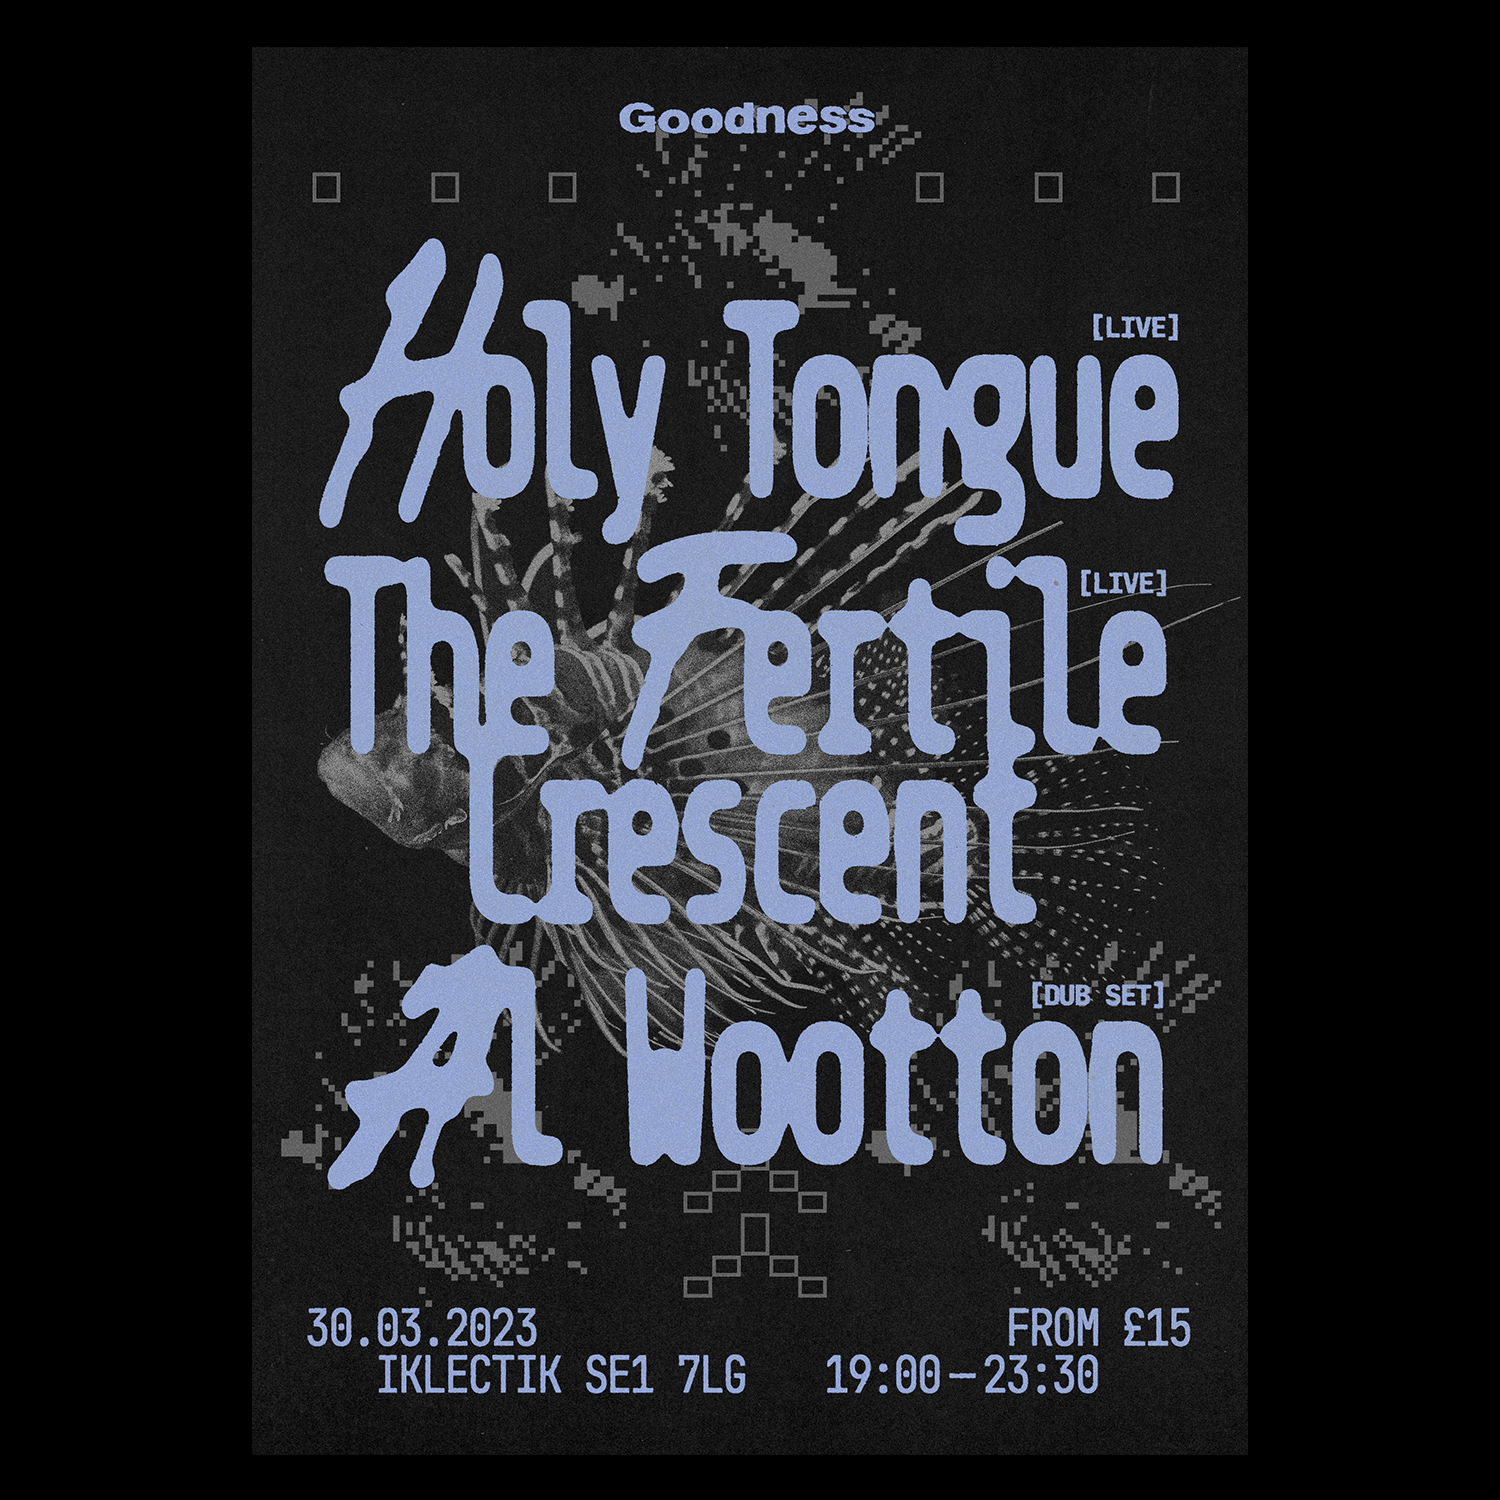 Goodness: Holy Tongue, The Fertile Crescent, Al Wootton [dub set] - フライヤー表